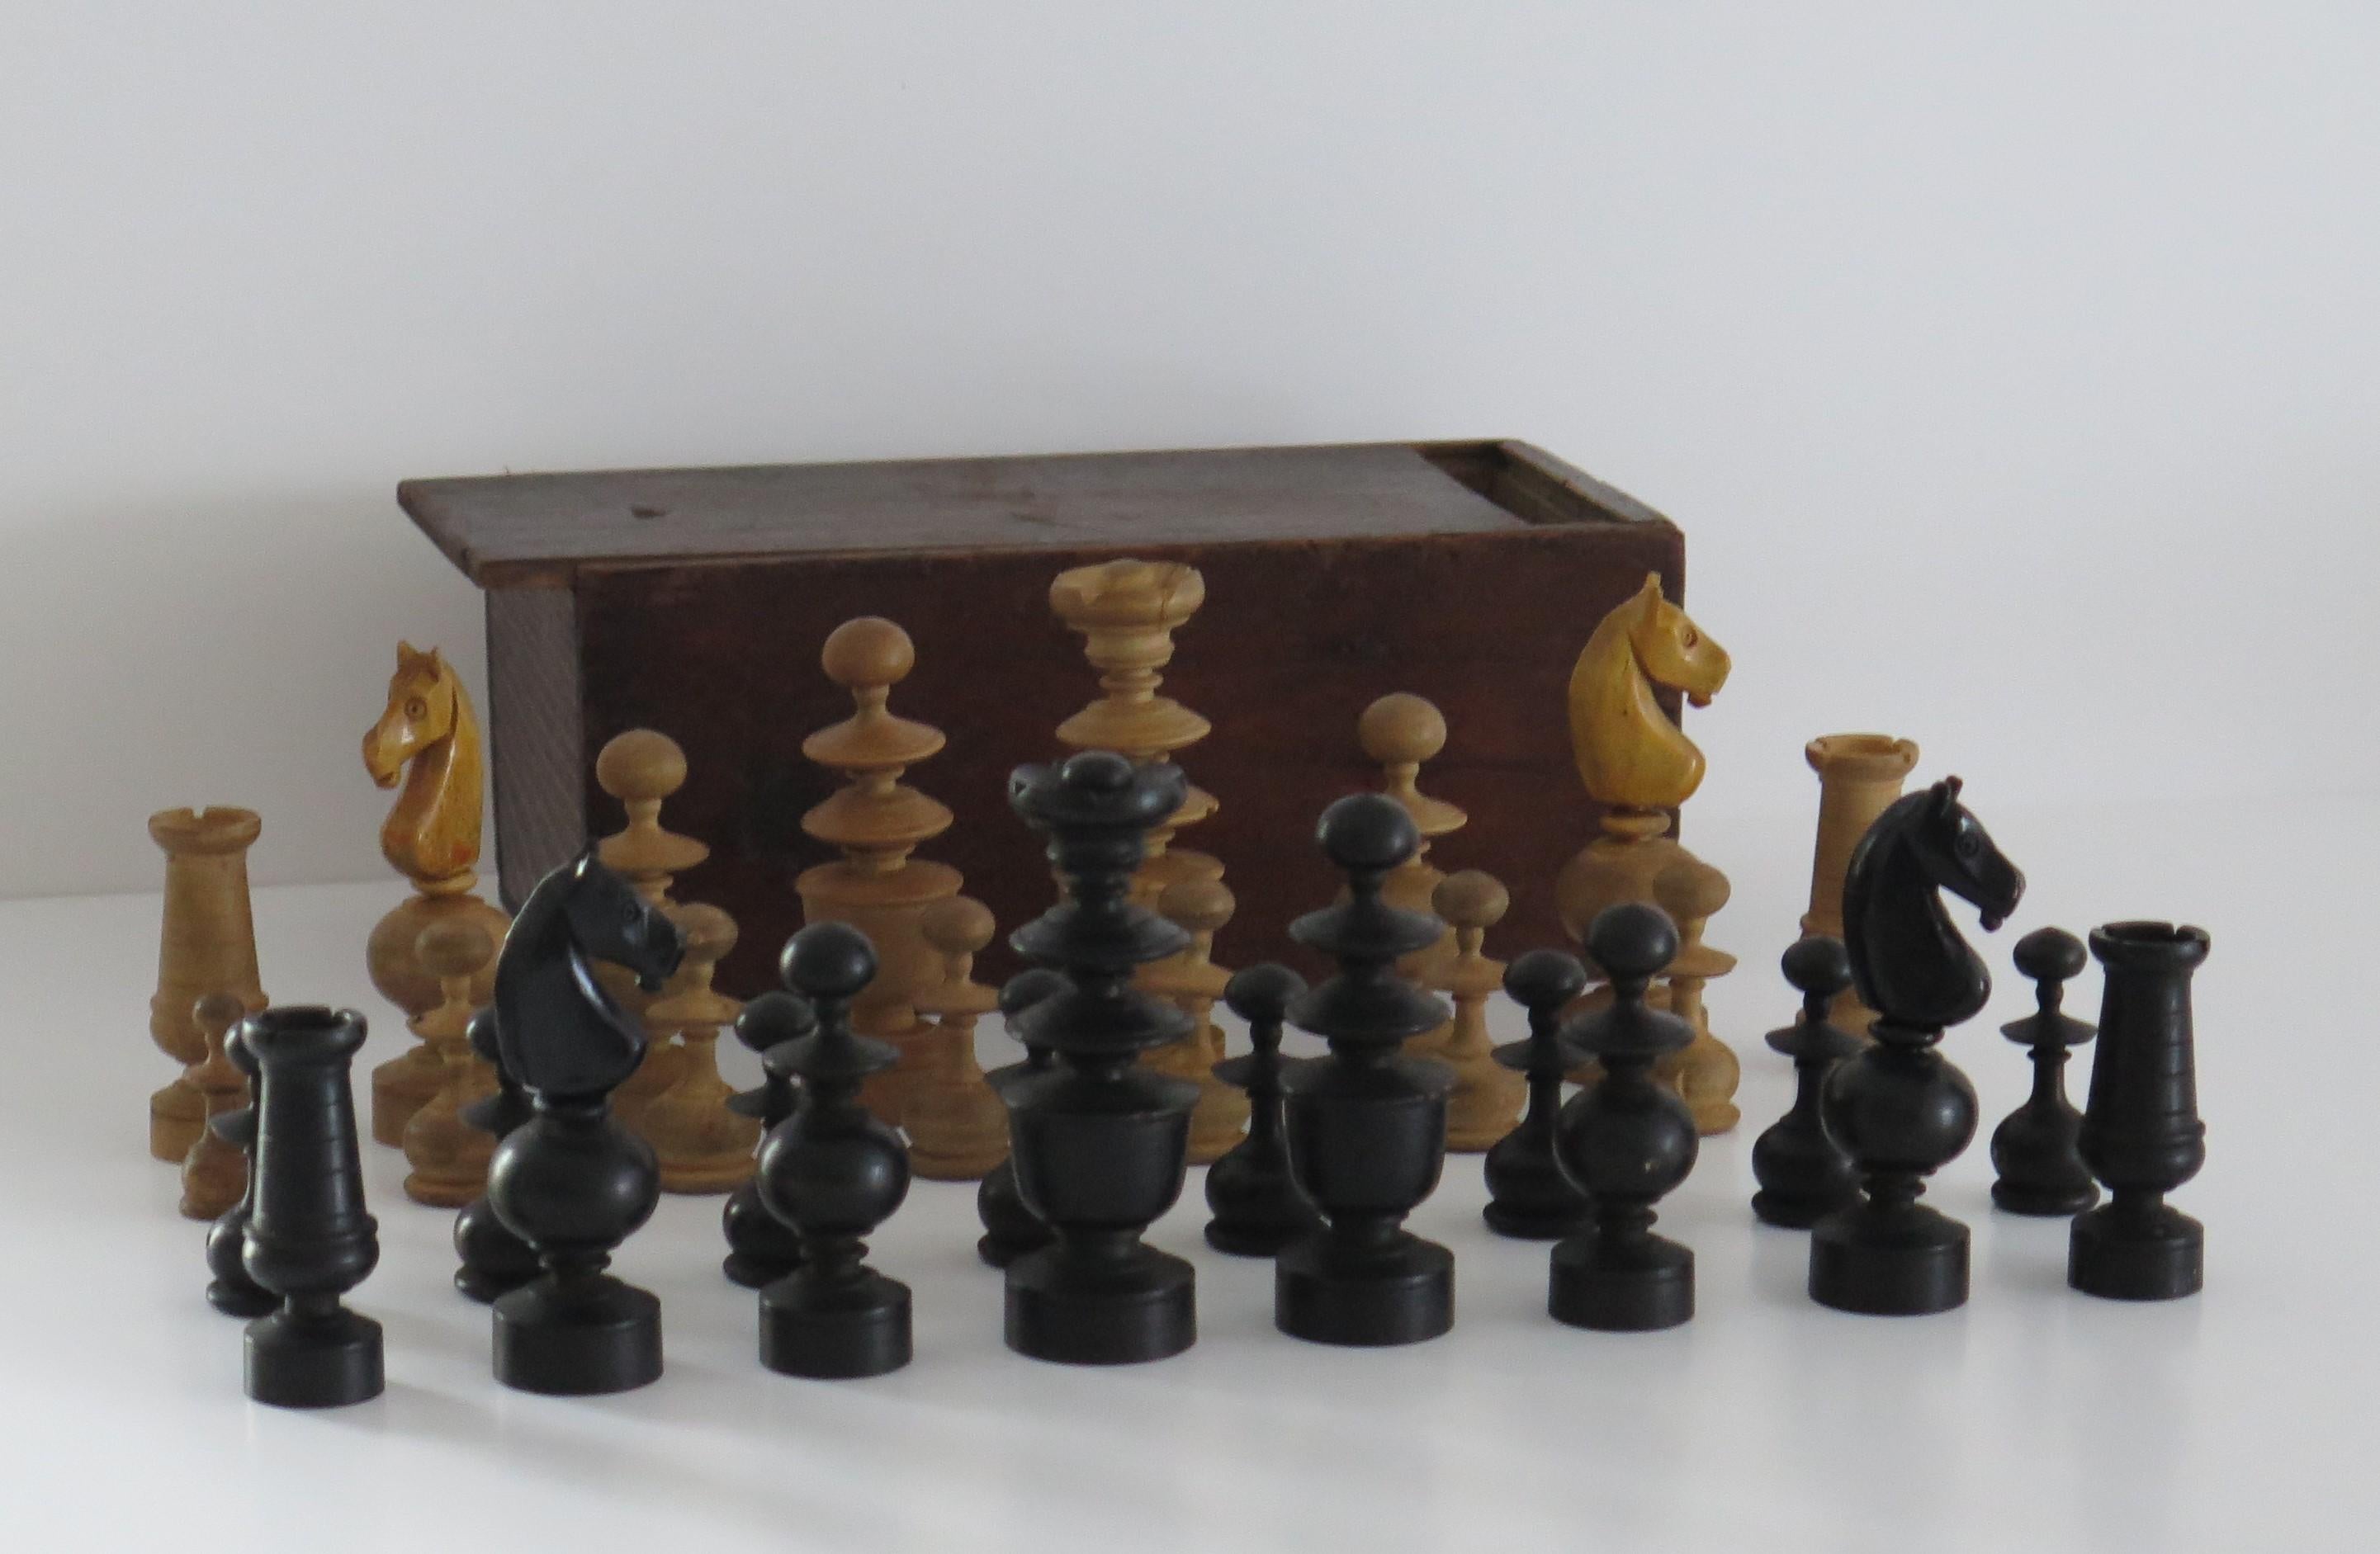 1776 chess set